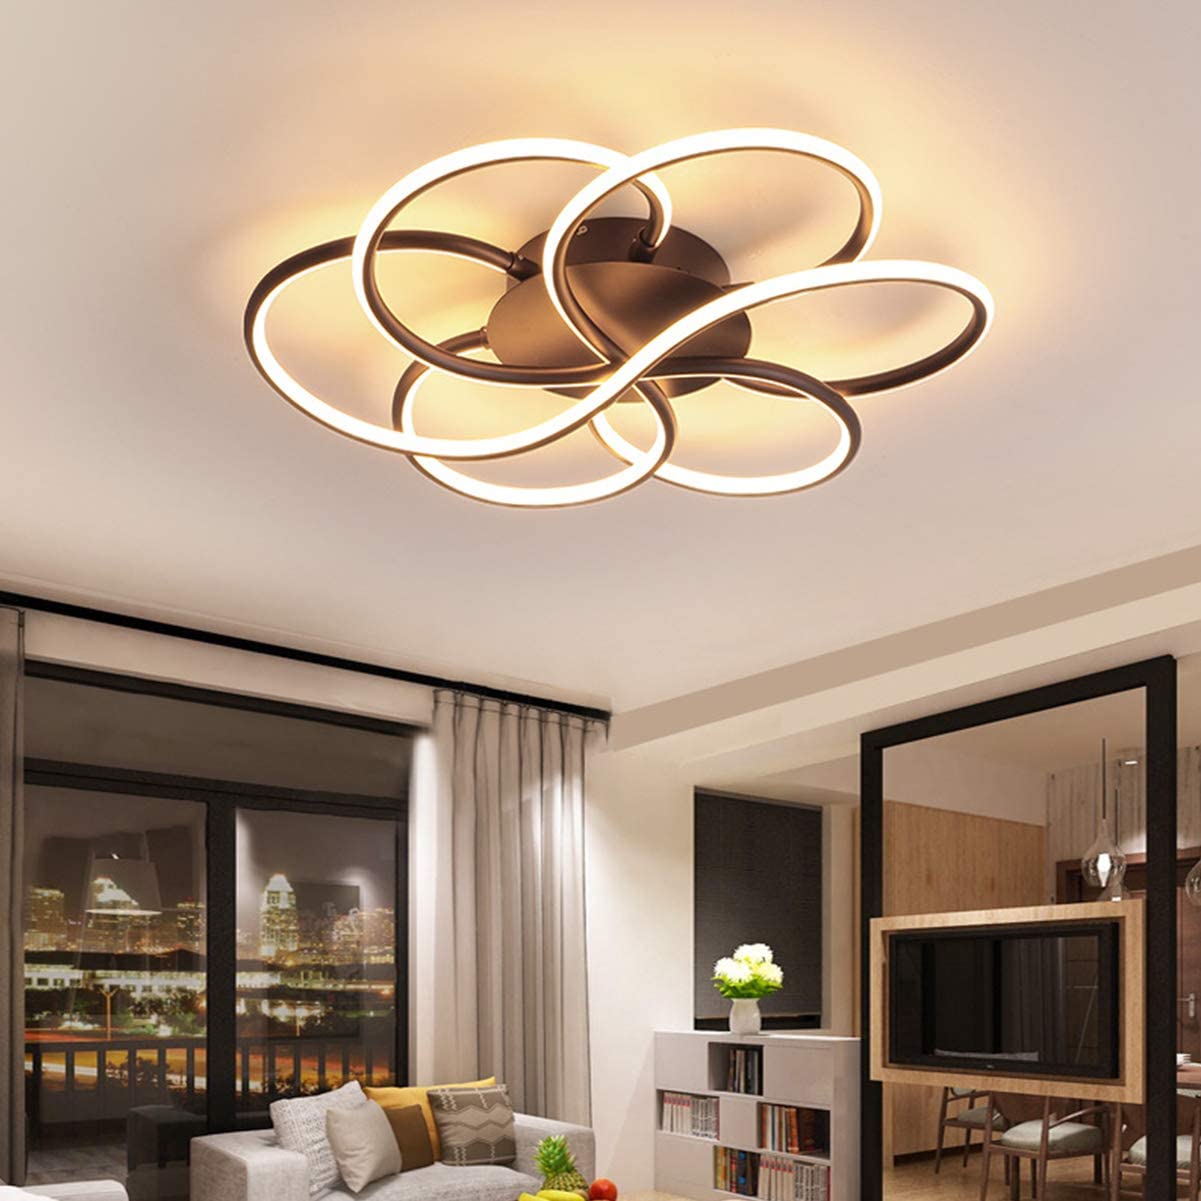 LED ceiling. 1 +70 Unique Ceiling Design Ideas for Your Living Room - 22